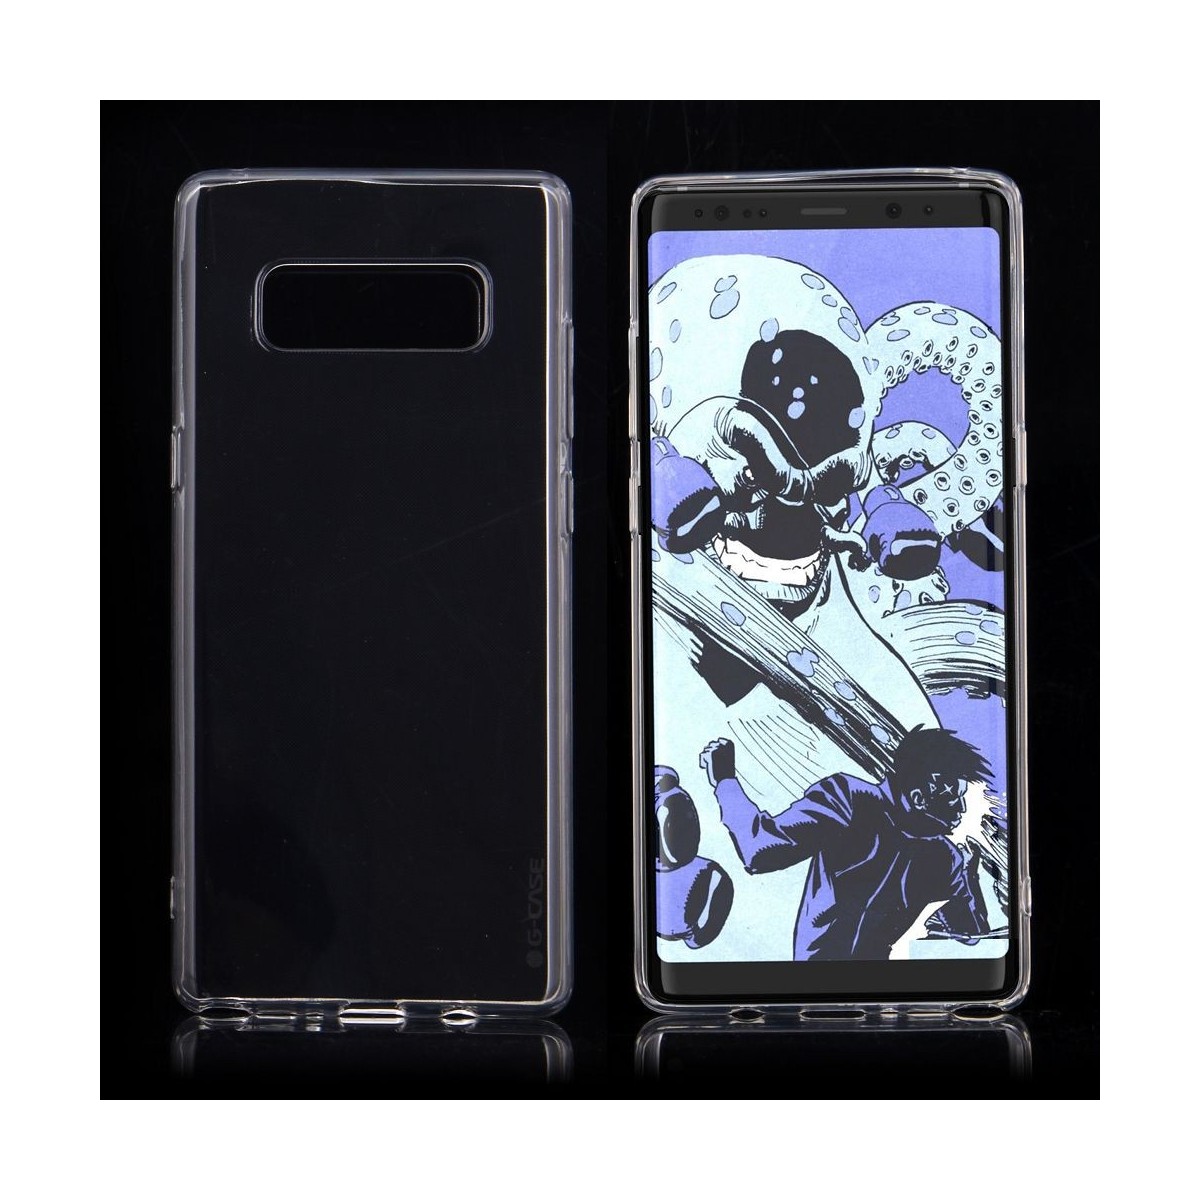 Coque Galaxy Note 8 plastique souple Transparente - G-case